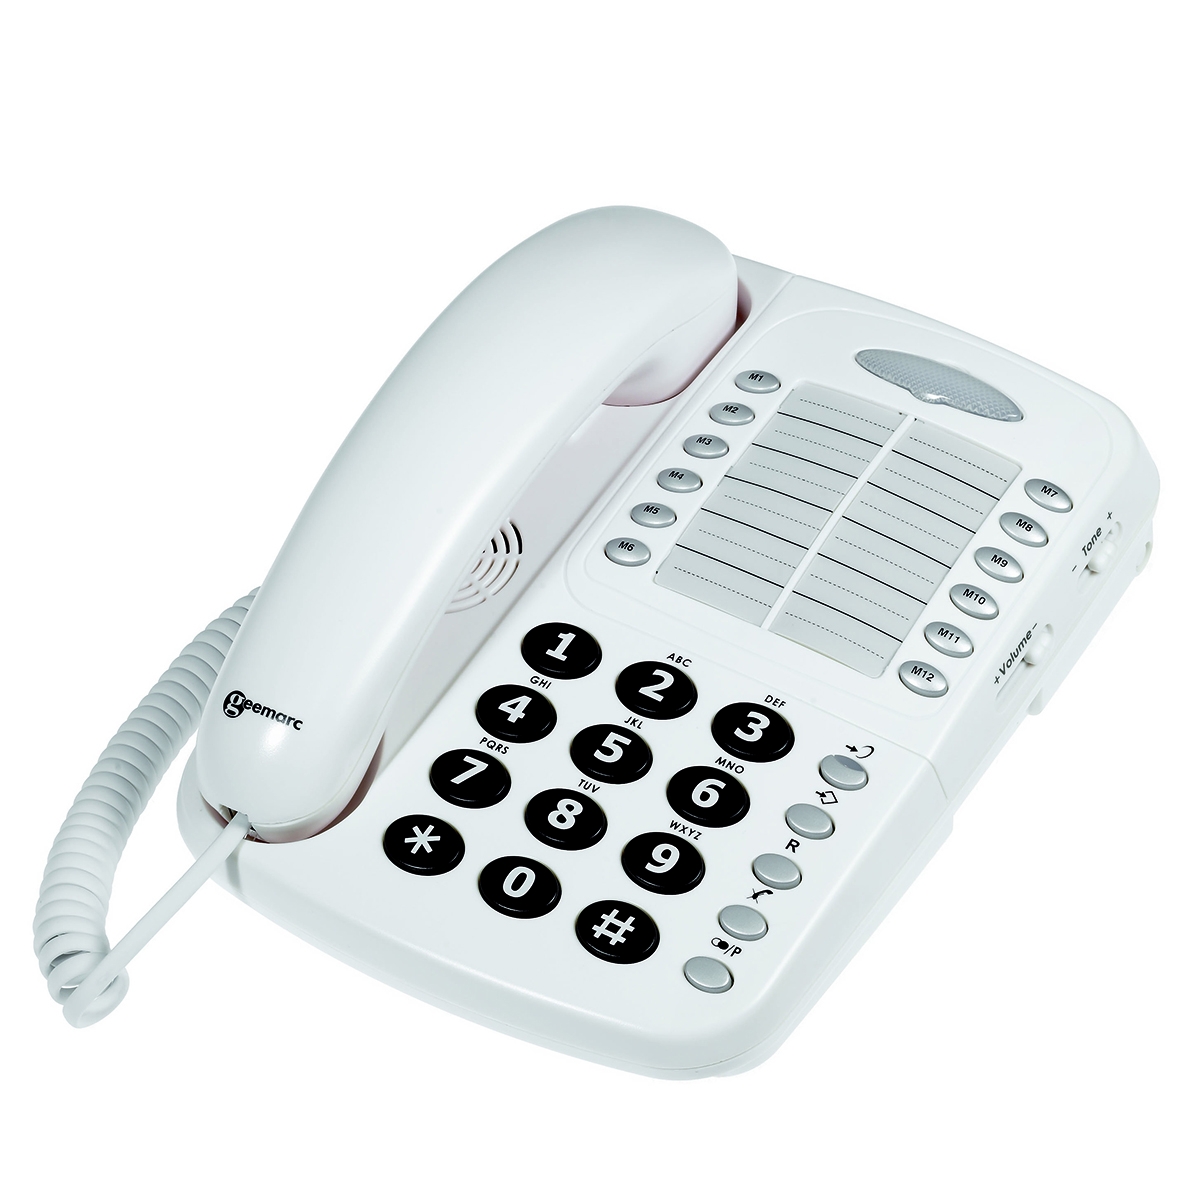 Geemarc CL1100 Telephone White